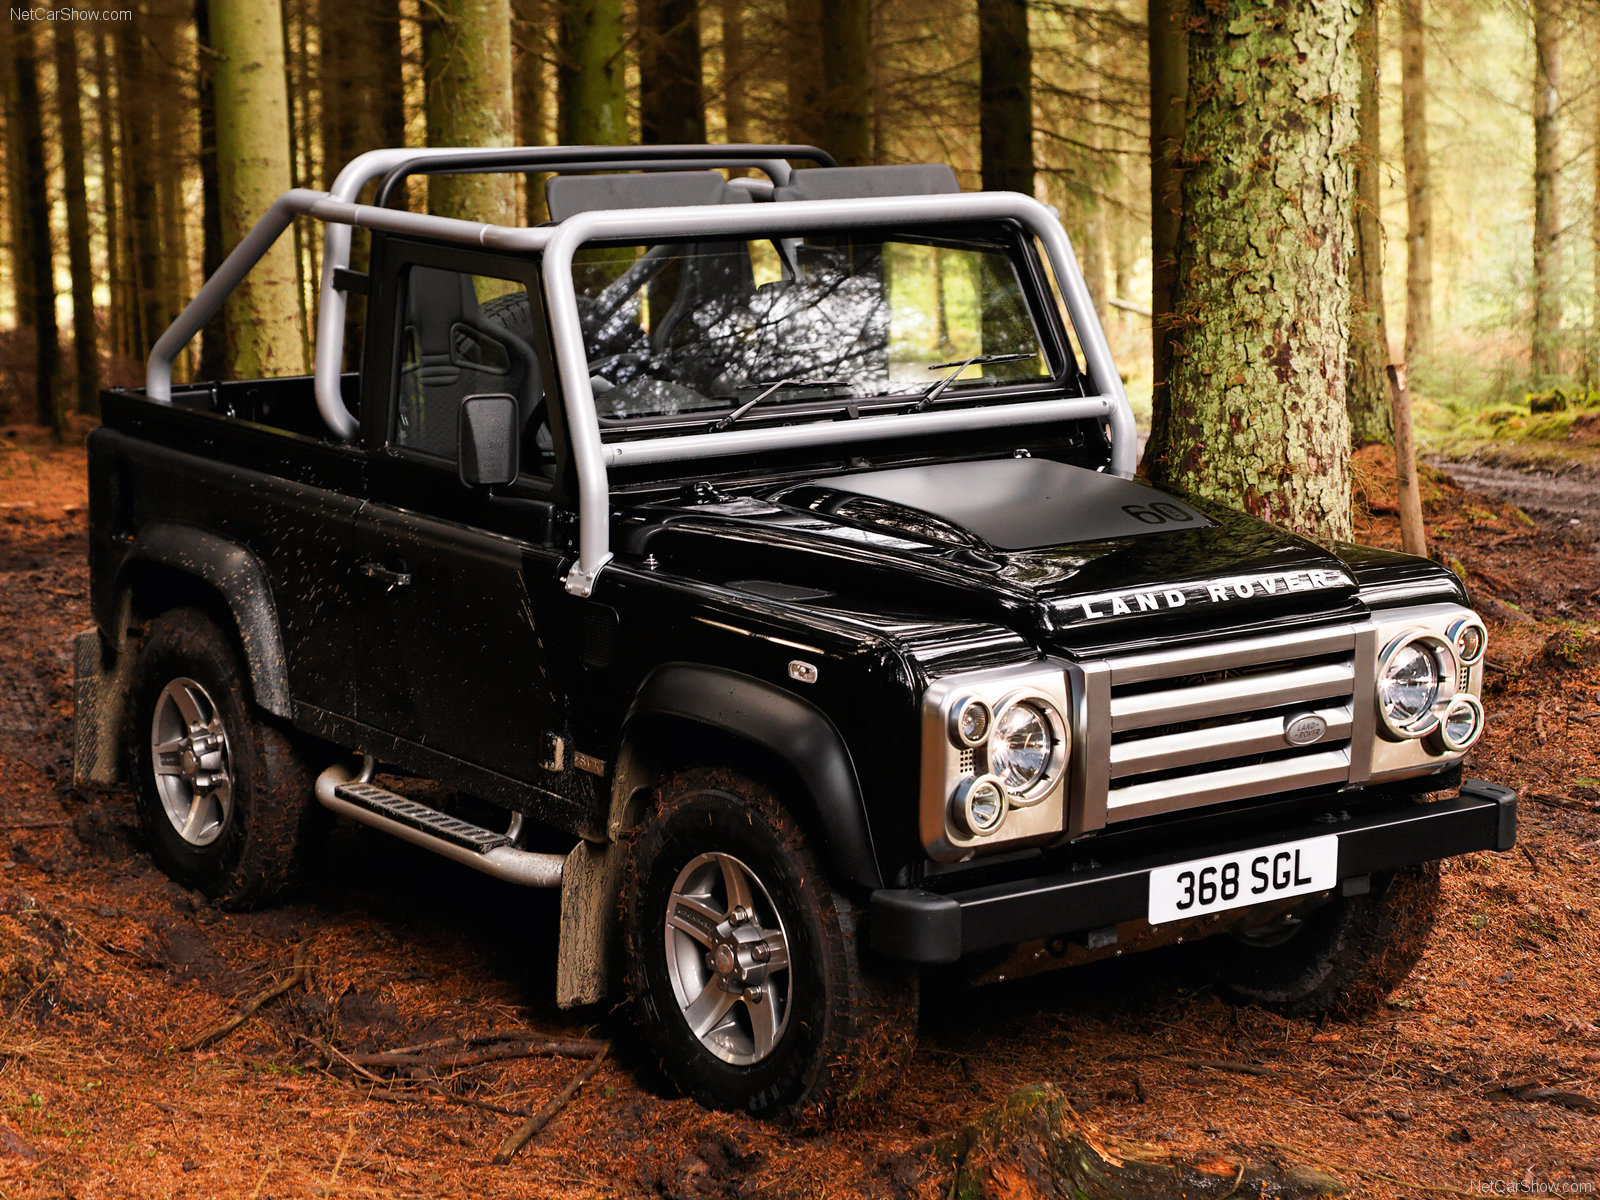 Download full size black 368 SGL Land Rover wallpaper / 1600x1200